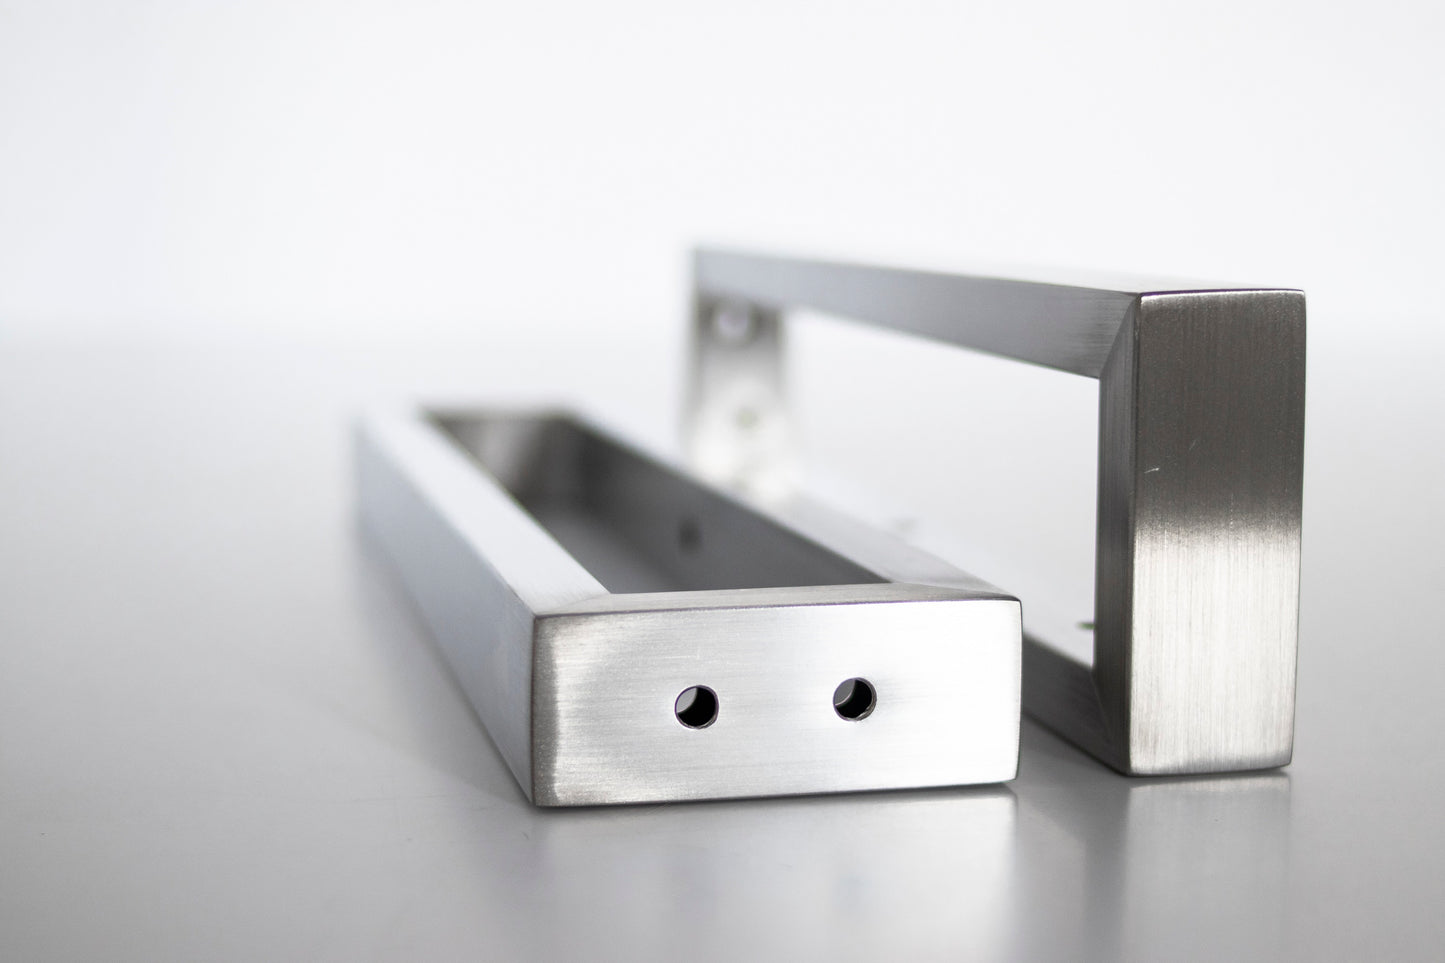 CHYRKA® Wall console MK stainless steel 201 bracket for console shelf, sink